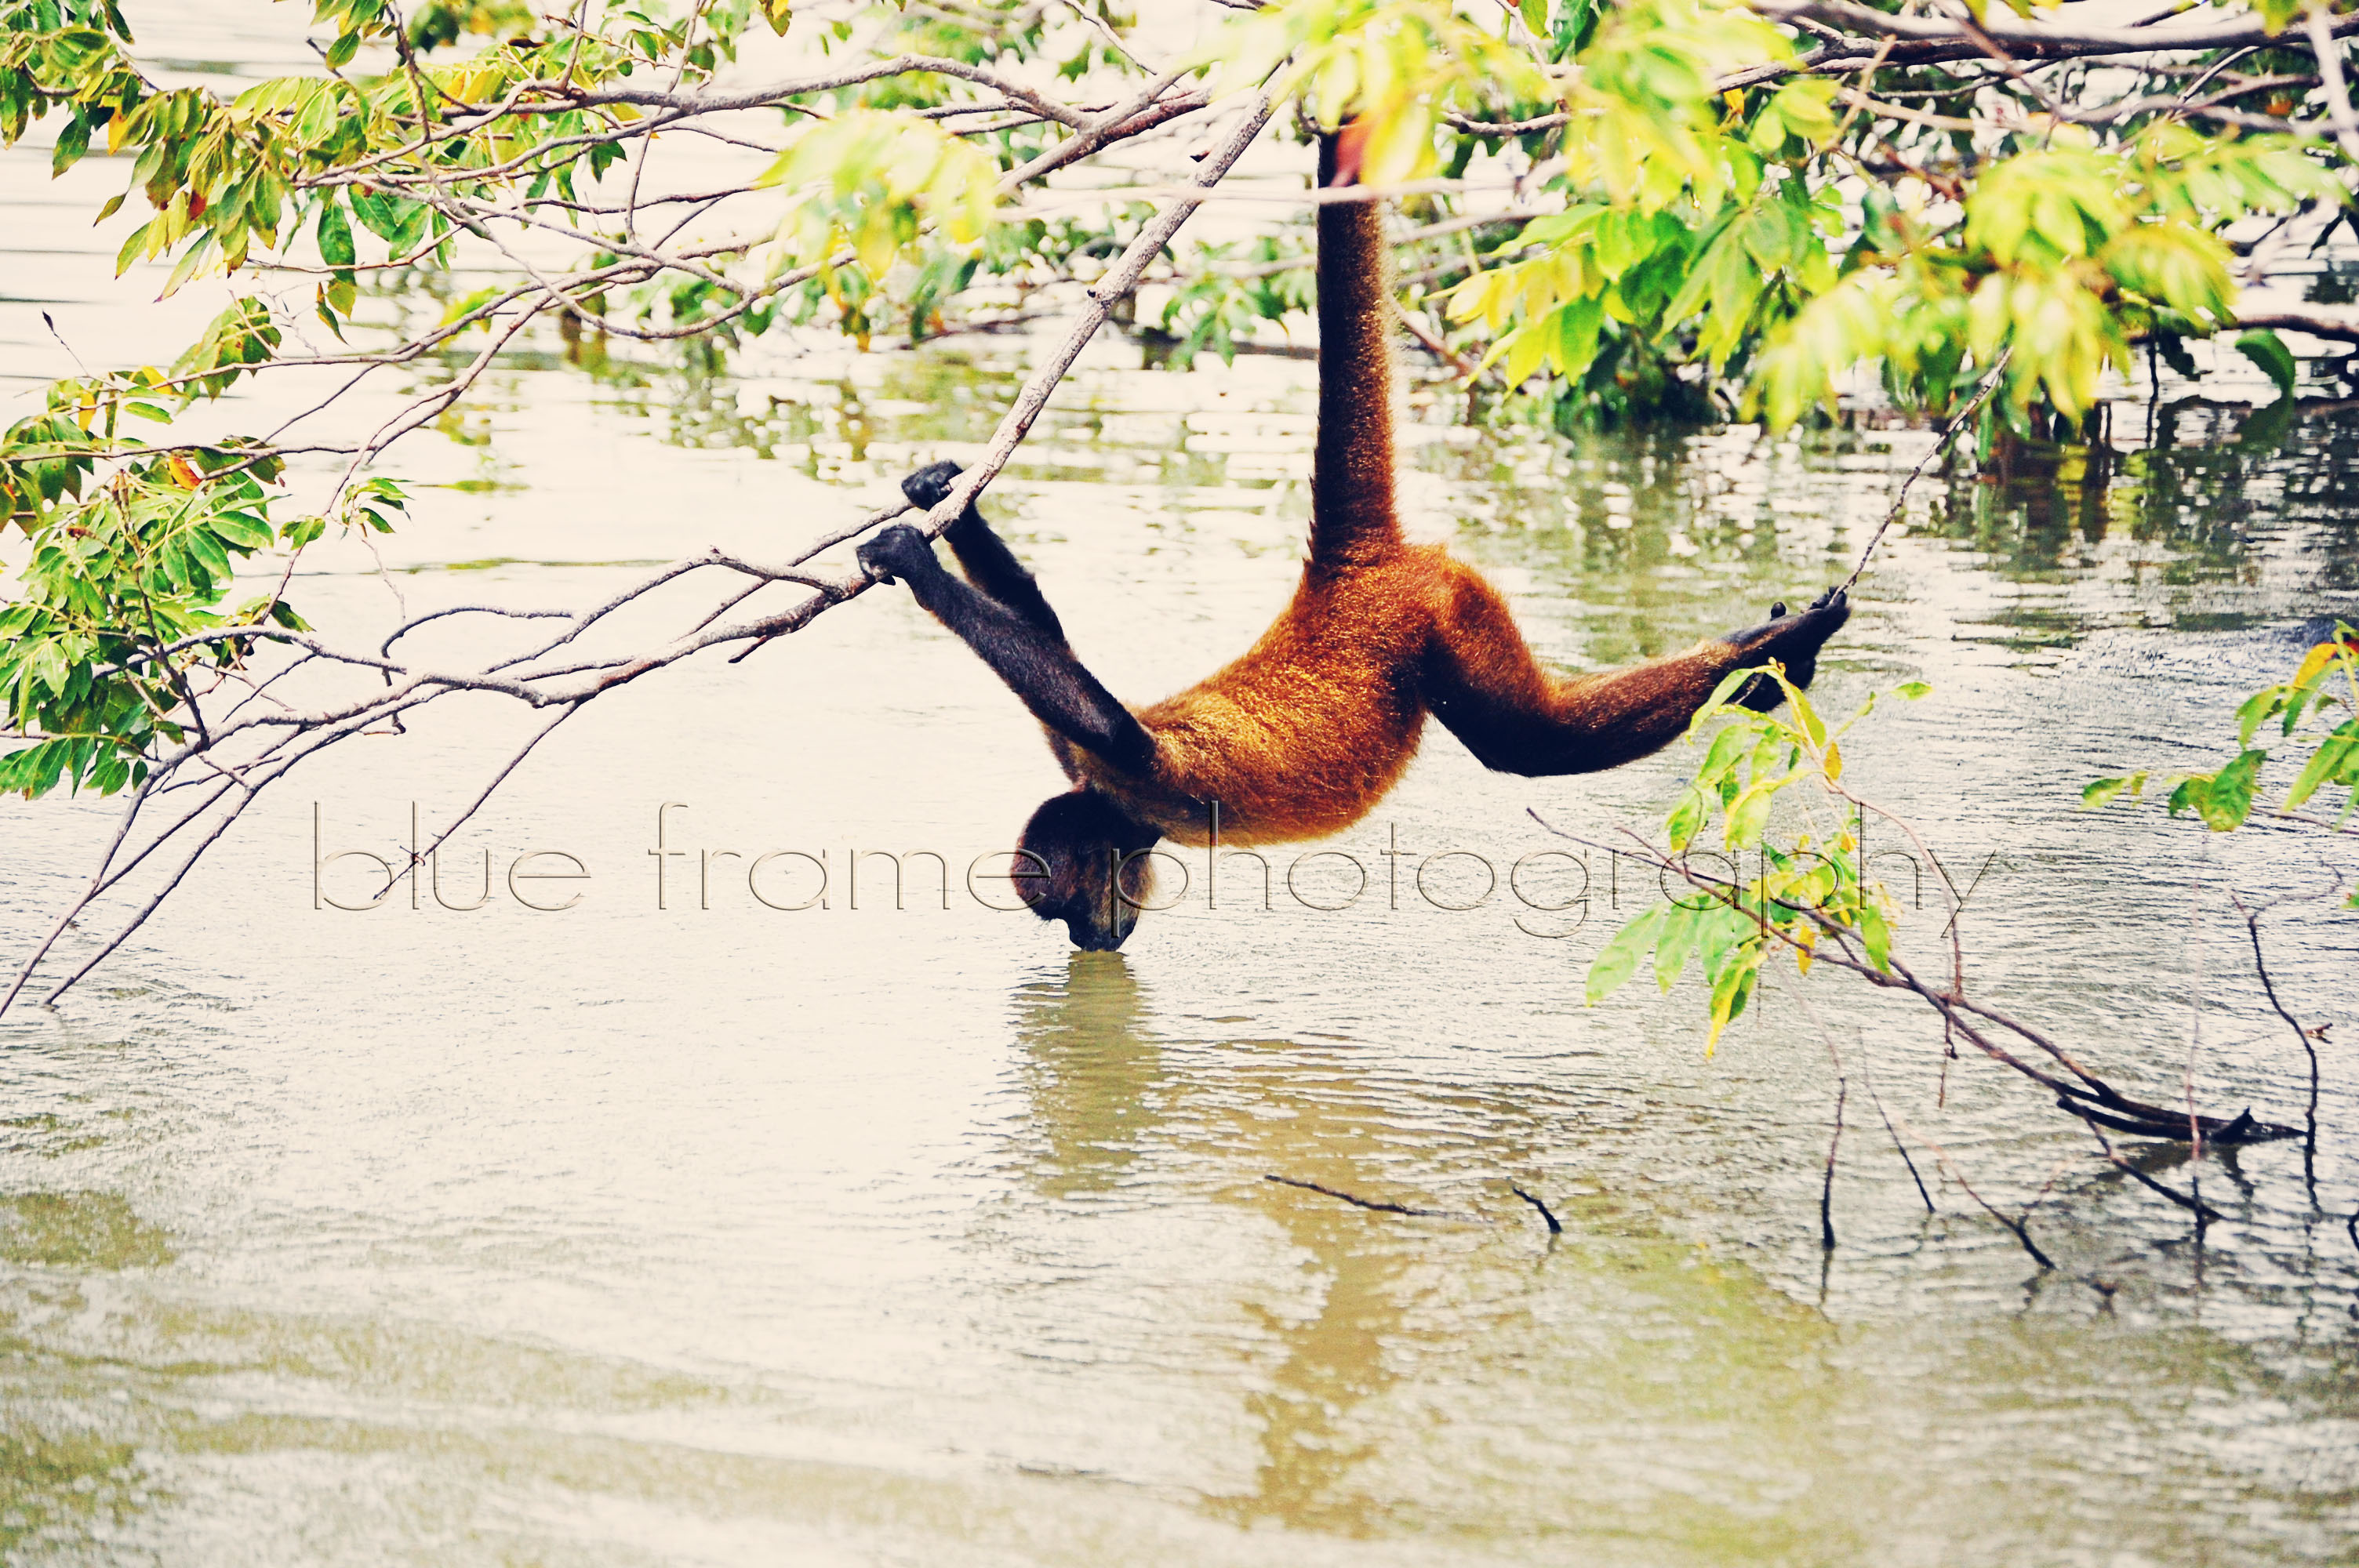 Wild Monkeys on Monkey Island | Blue Frame Photography